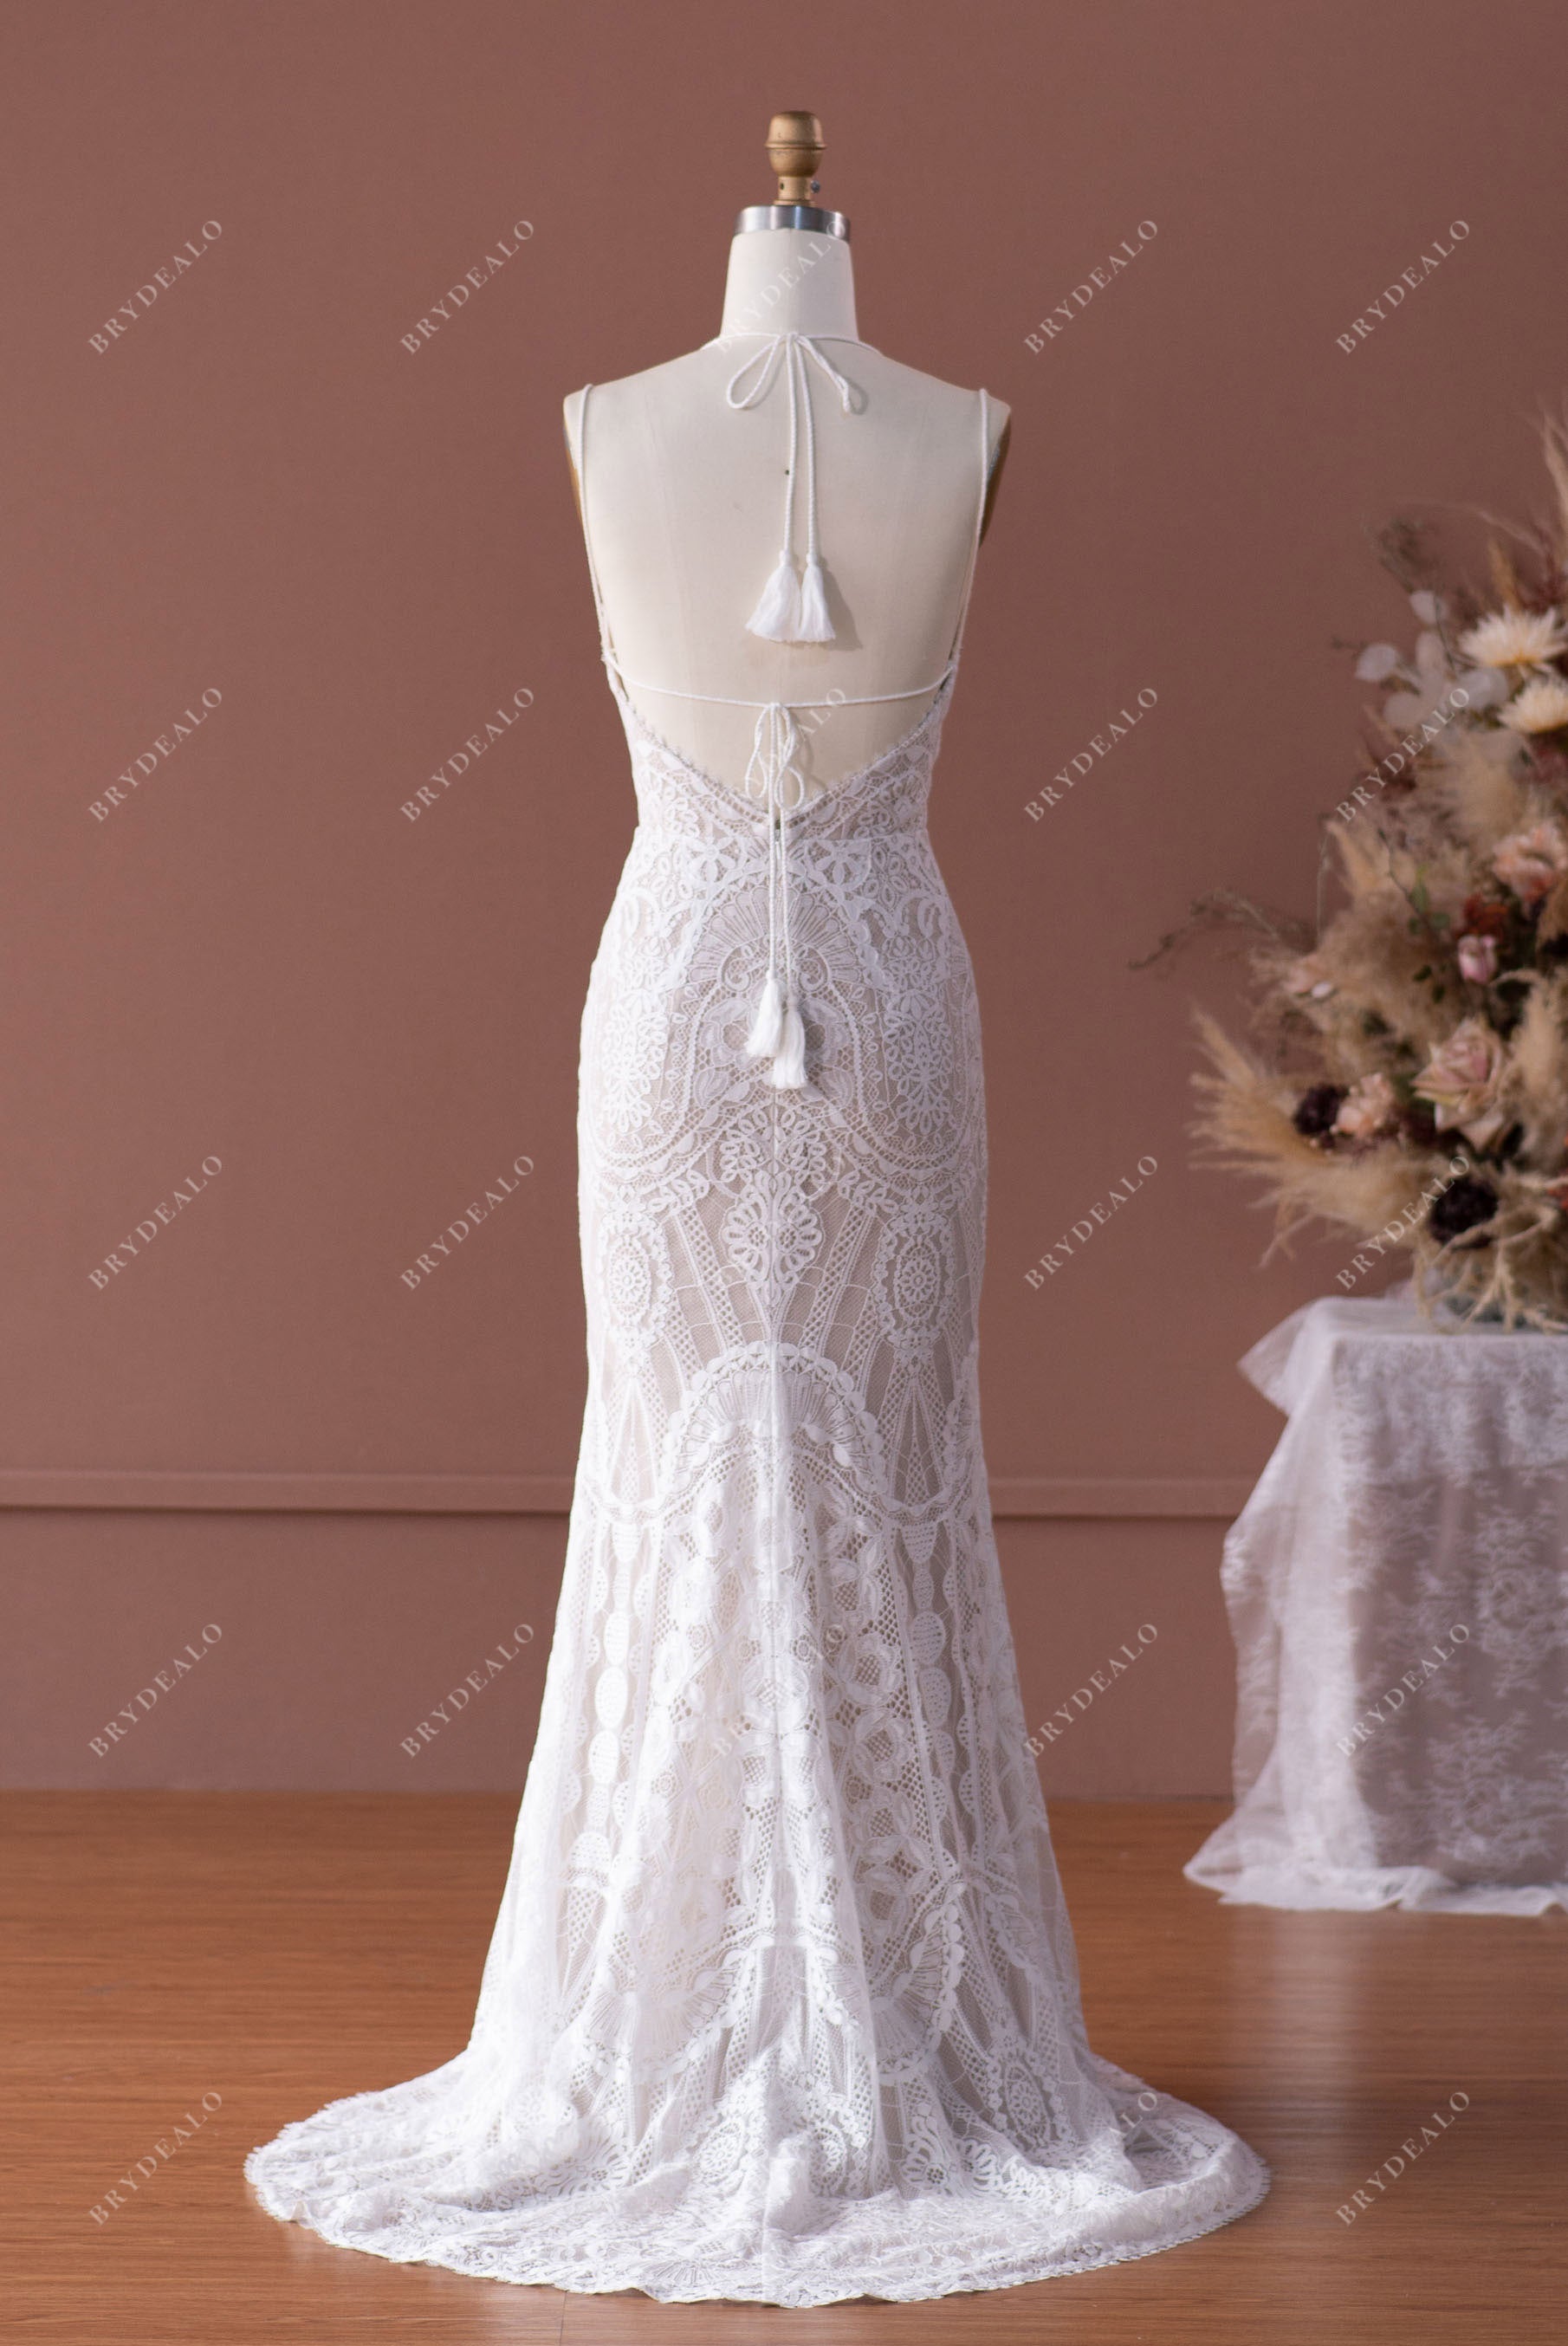 Boho Lace Tassel Low Back Fit & Flare Sample Wedding Dress with Slit